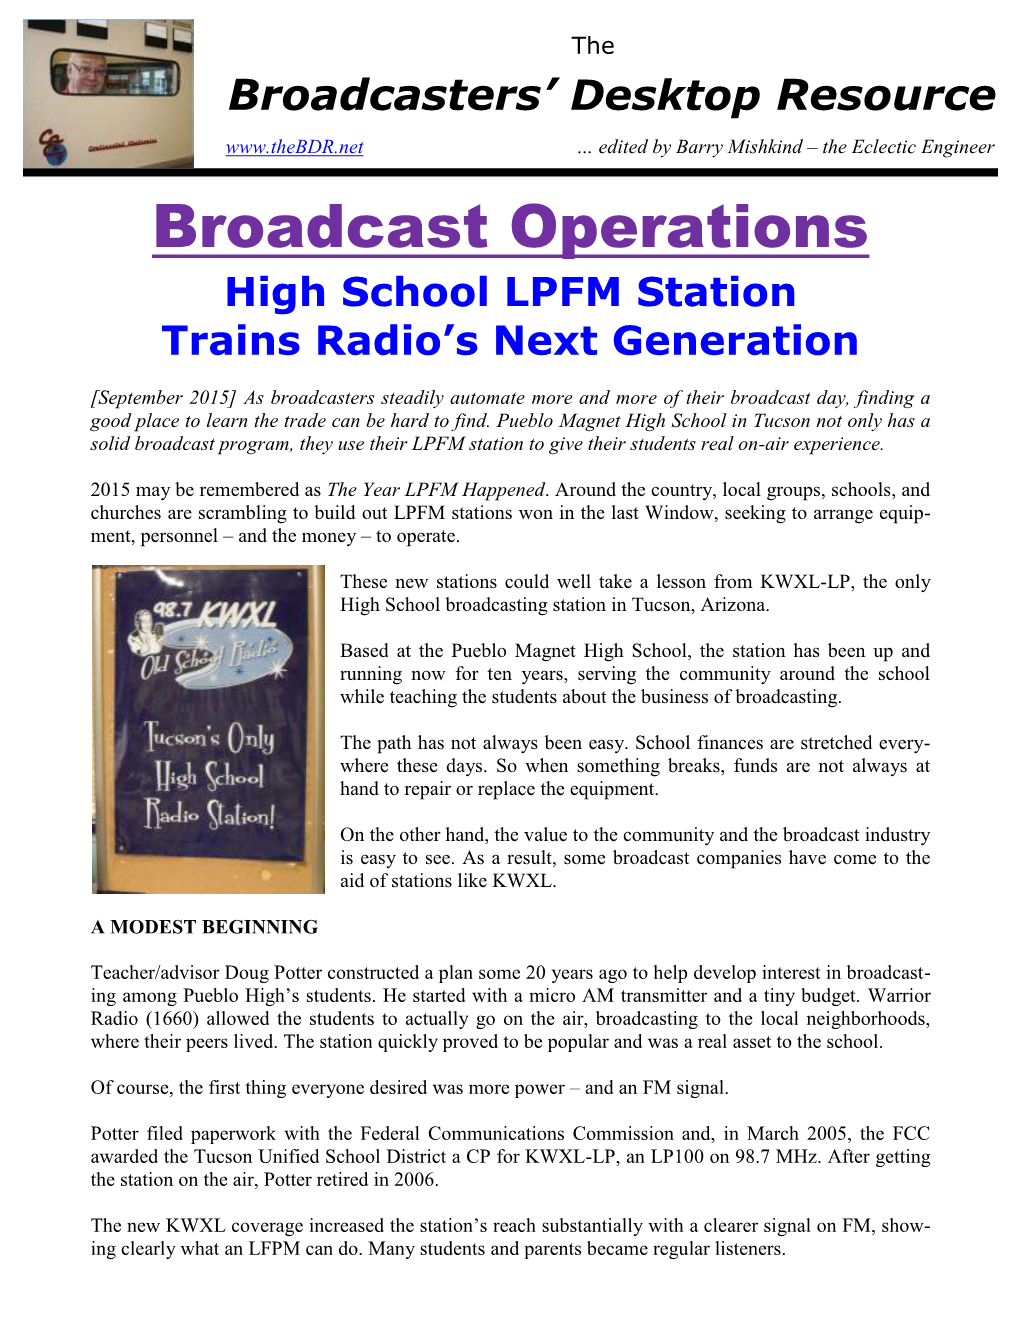 Broadcast Operations High School LPFM Station Trains Radio’S Next Generation